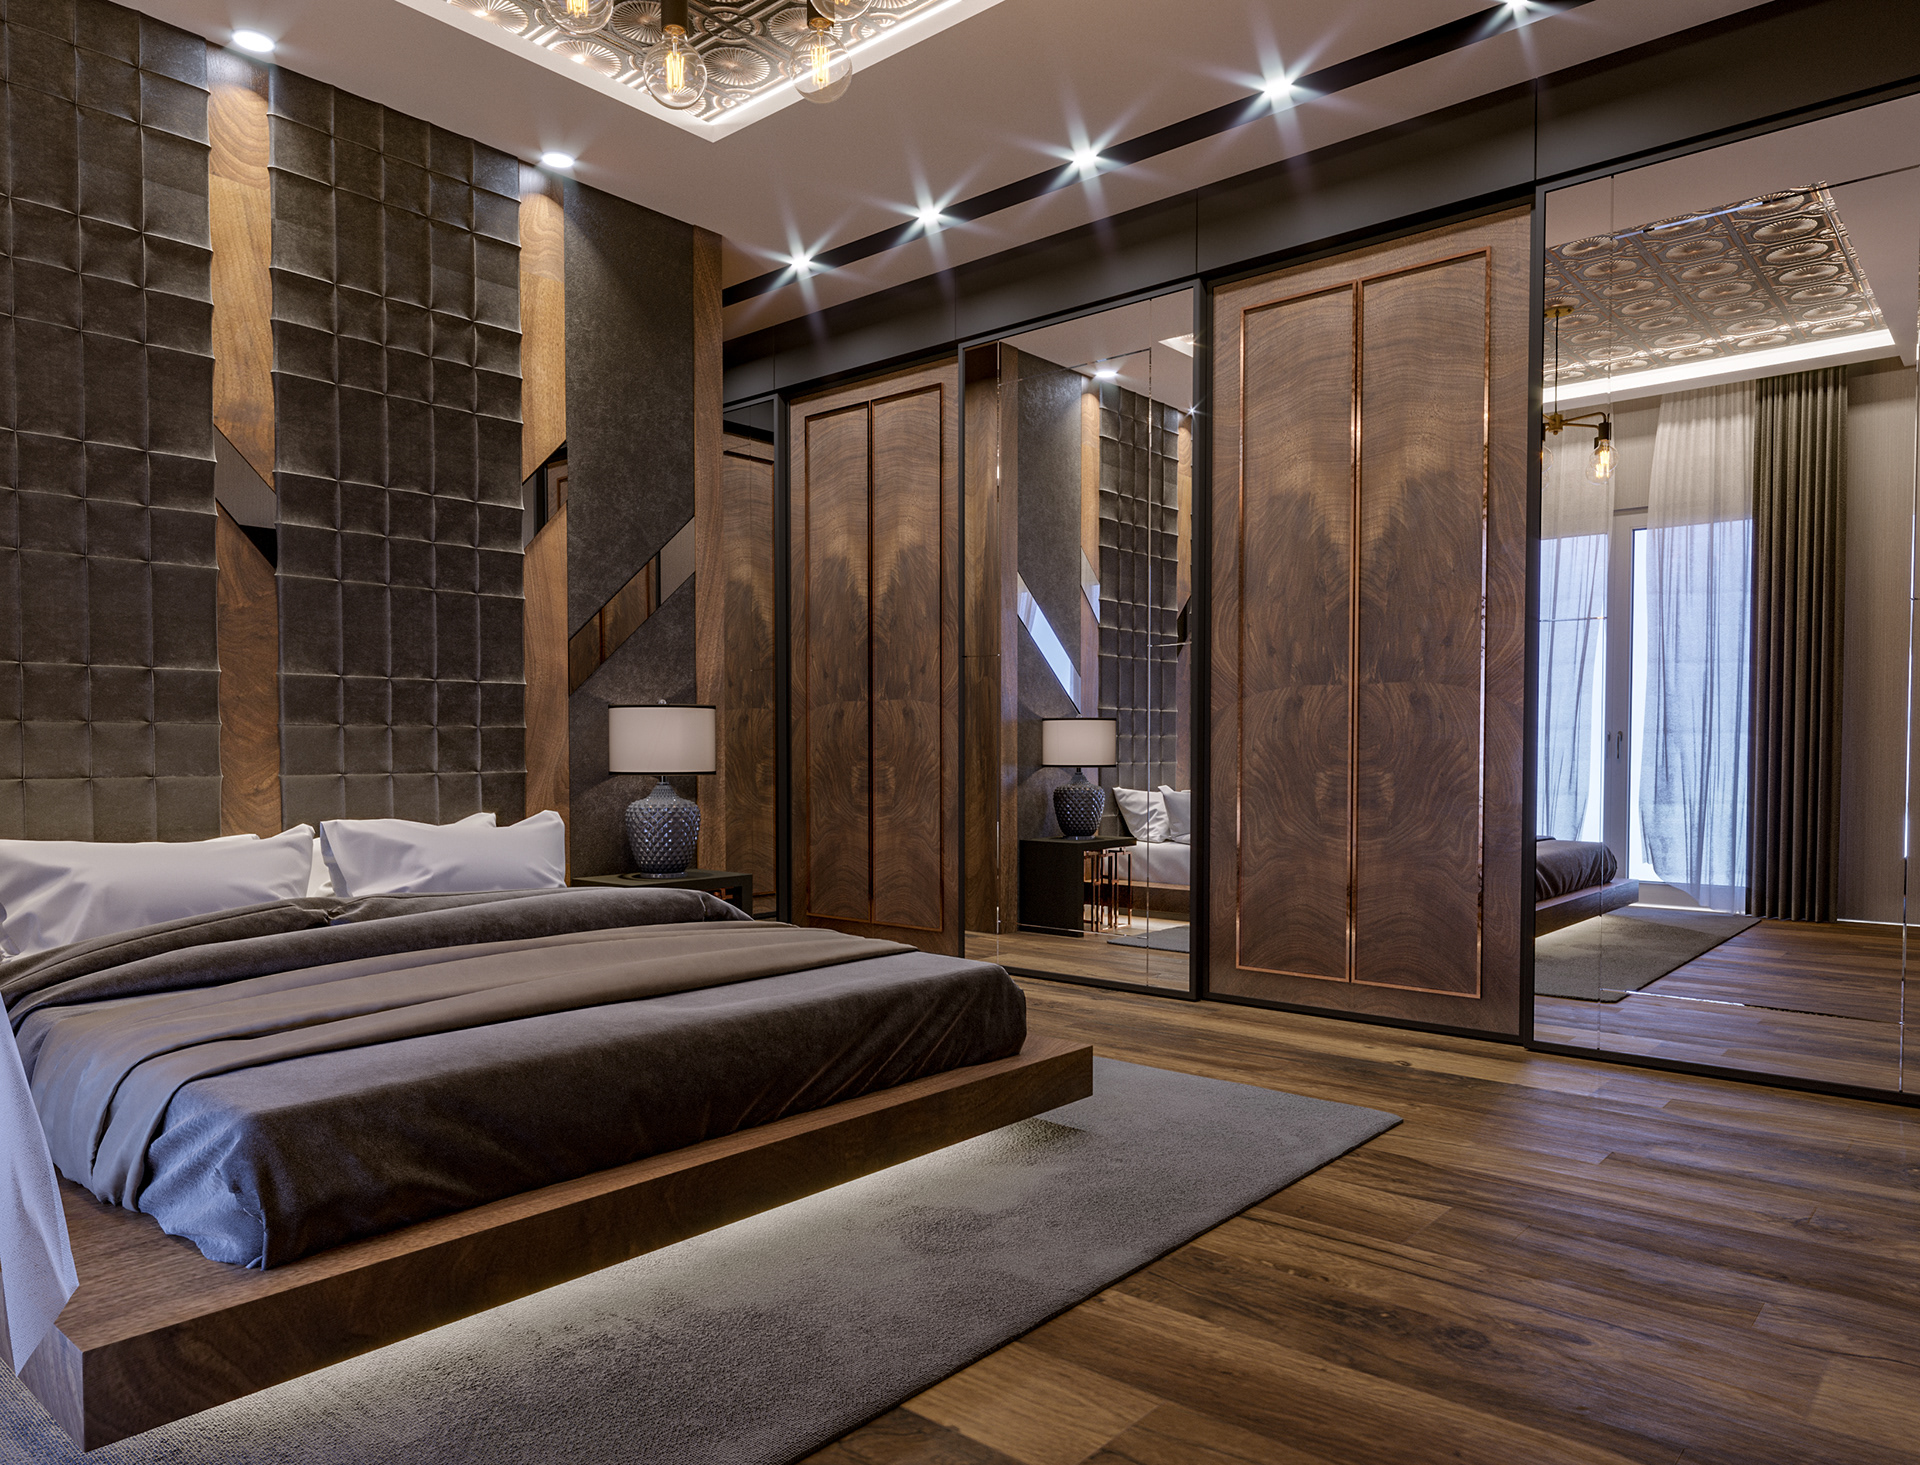 Interior design for bedroom simple